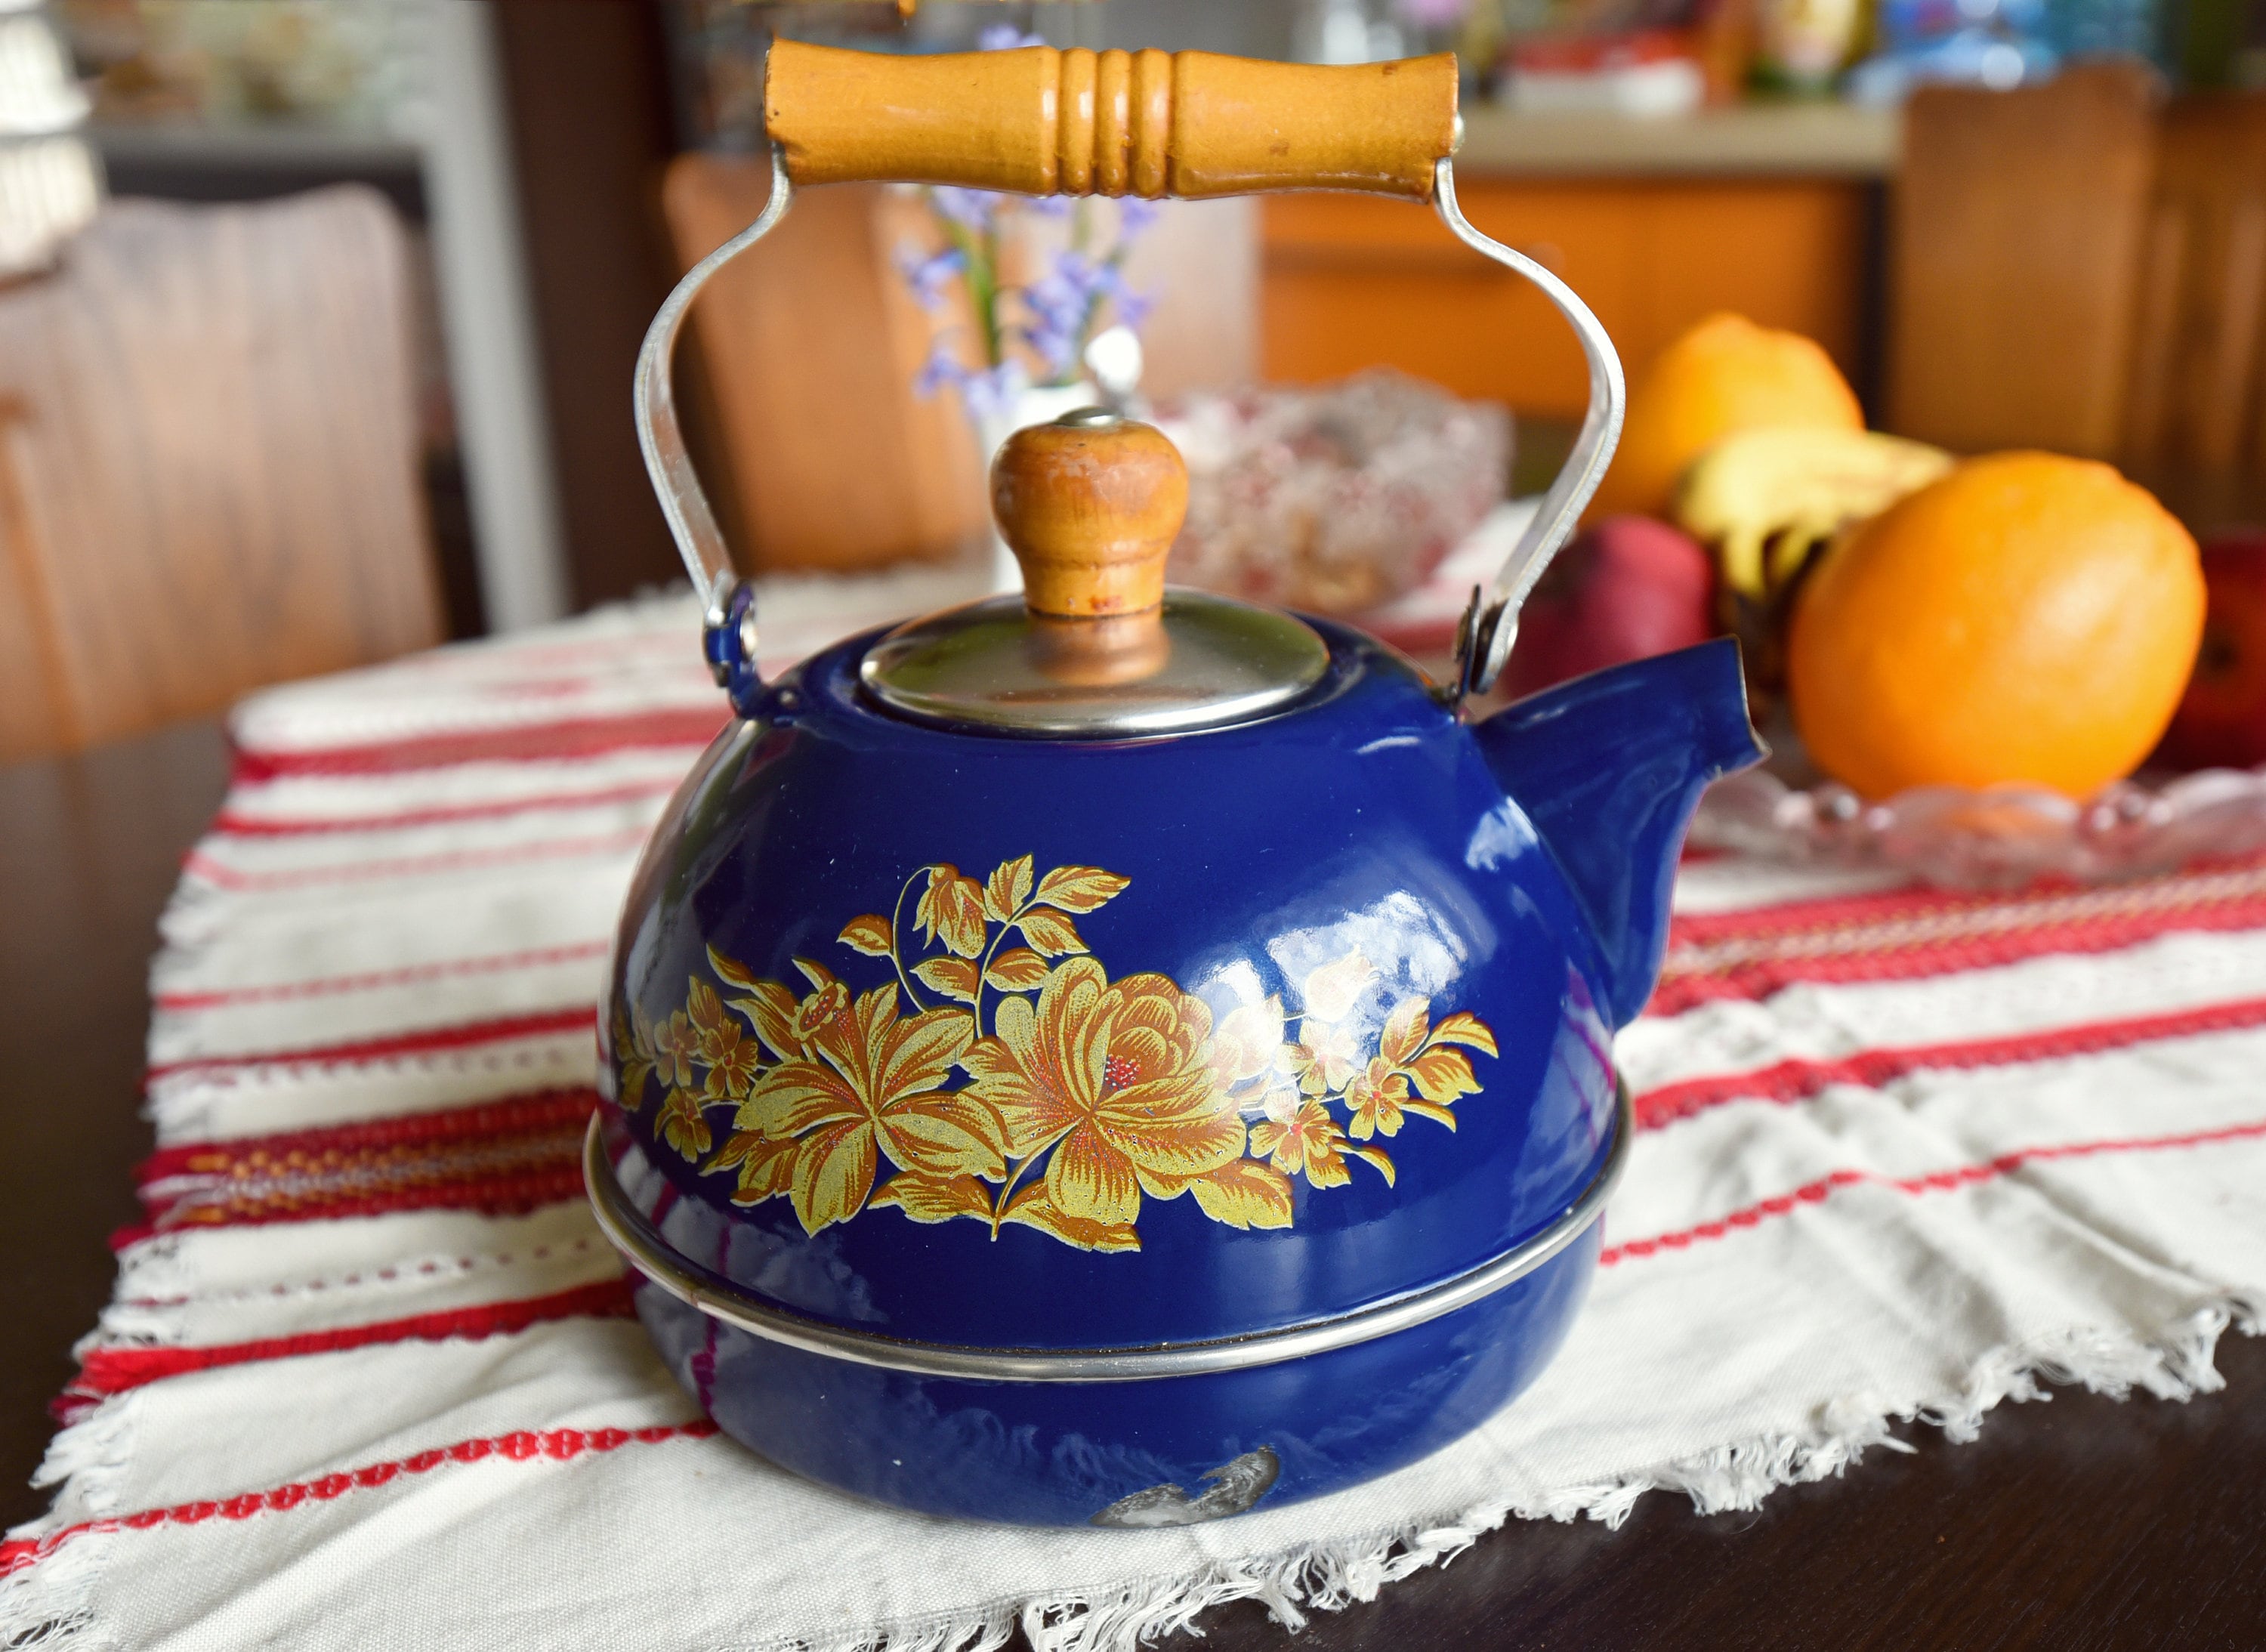 Vintage Blue Enamel Teapot/rustic Tea Kettle//farmhouse Decor